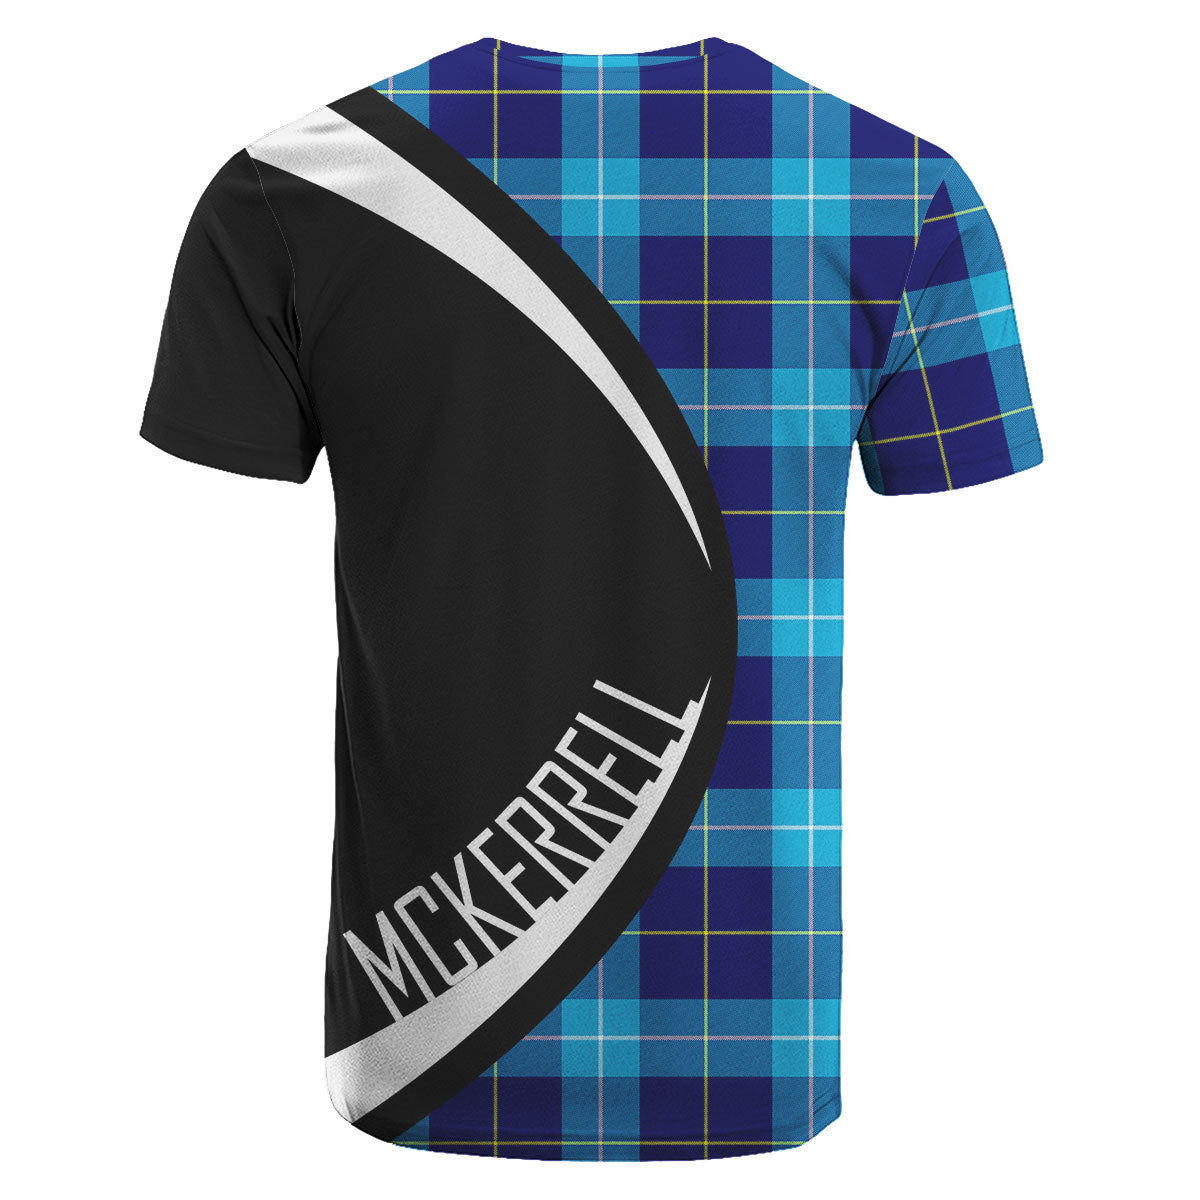 McKerrell Tartan Crest T-shirt - Circle Style